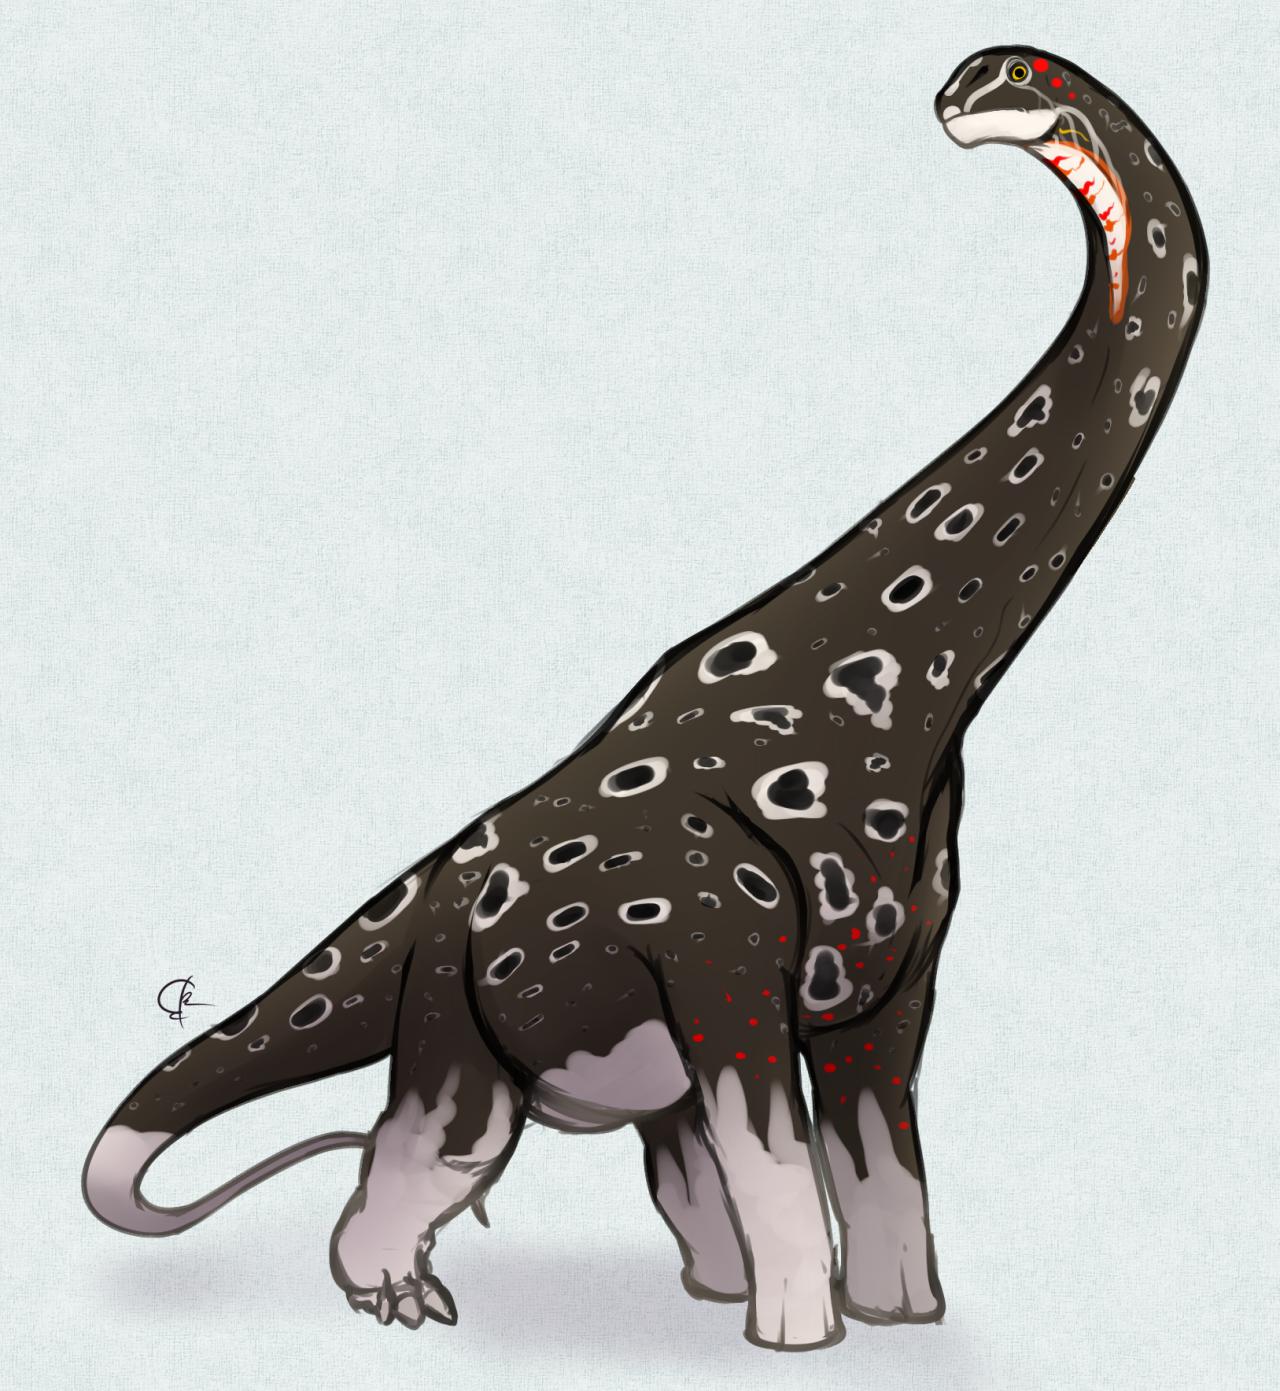 Ischyrosaurus, Jurassic
(Юрский период)